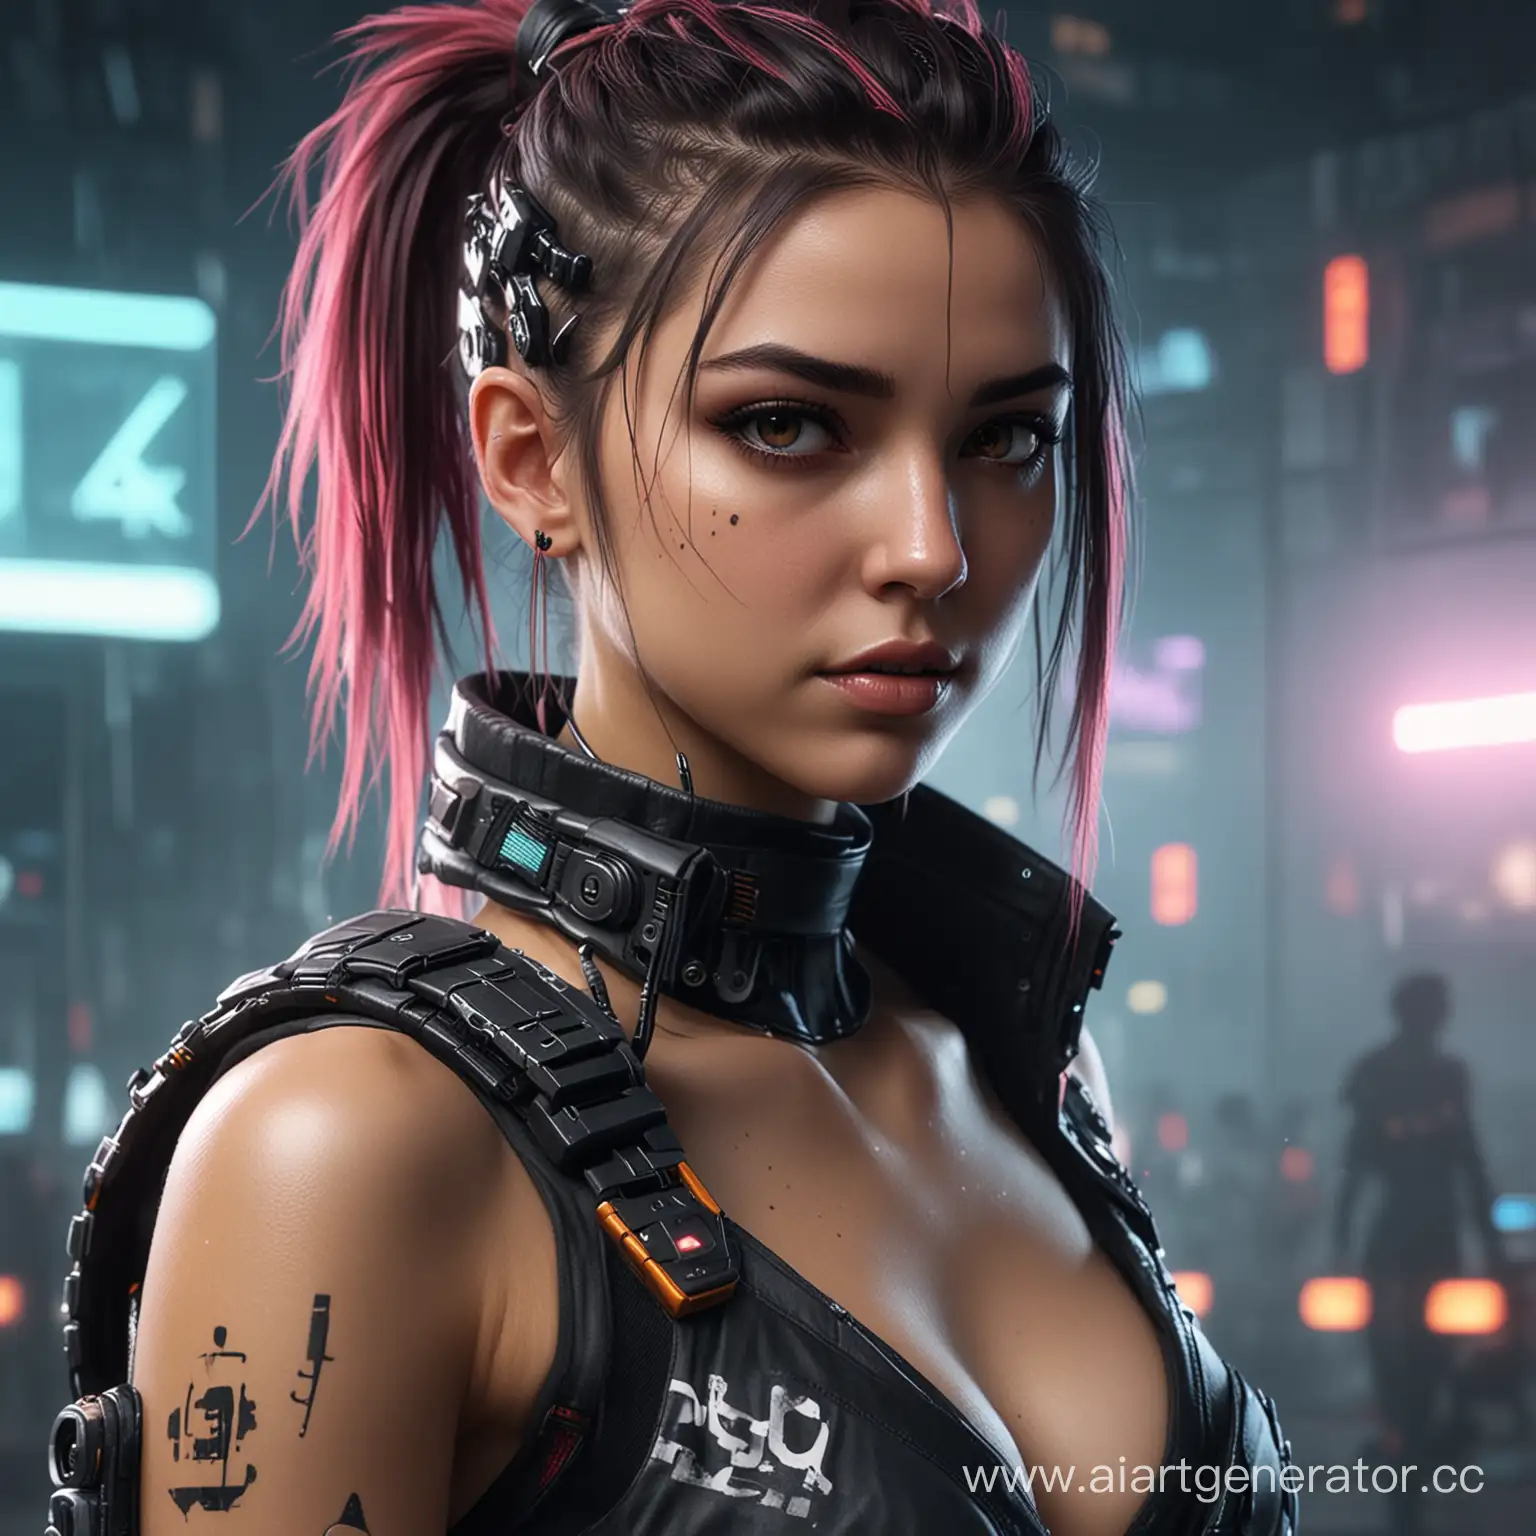 Realistic-4K-Cyberpunk-Style-Girl